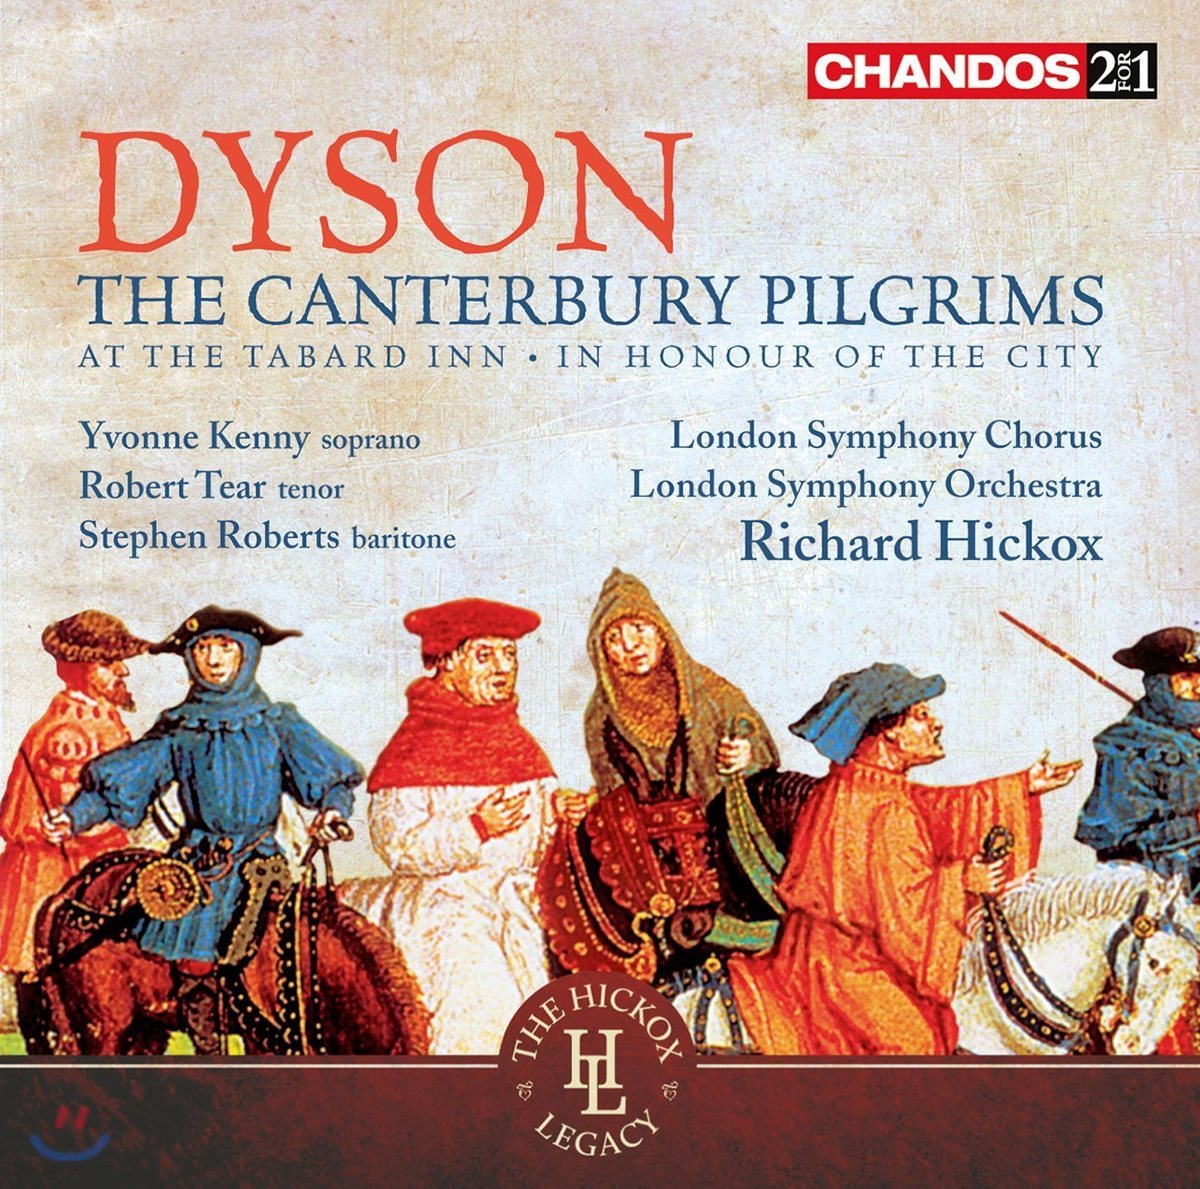 Richard Hickox 조지 다이슨: 캔터베리 순례 - 리차드 히콕스, 런던 심포니 합창단 &amp; 오케스트라 (George Dyson: The Canterbury Pilgrims)